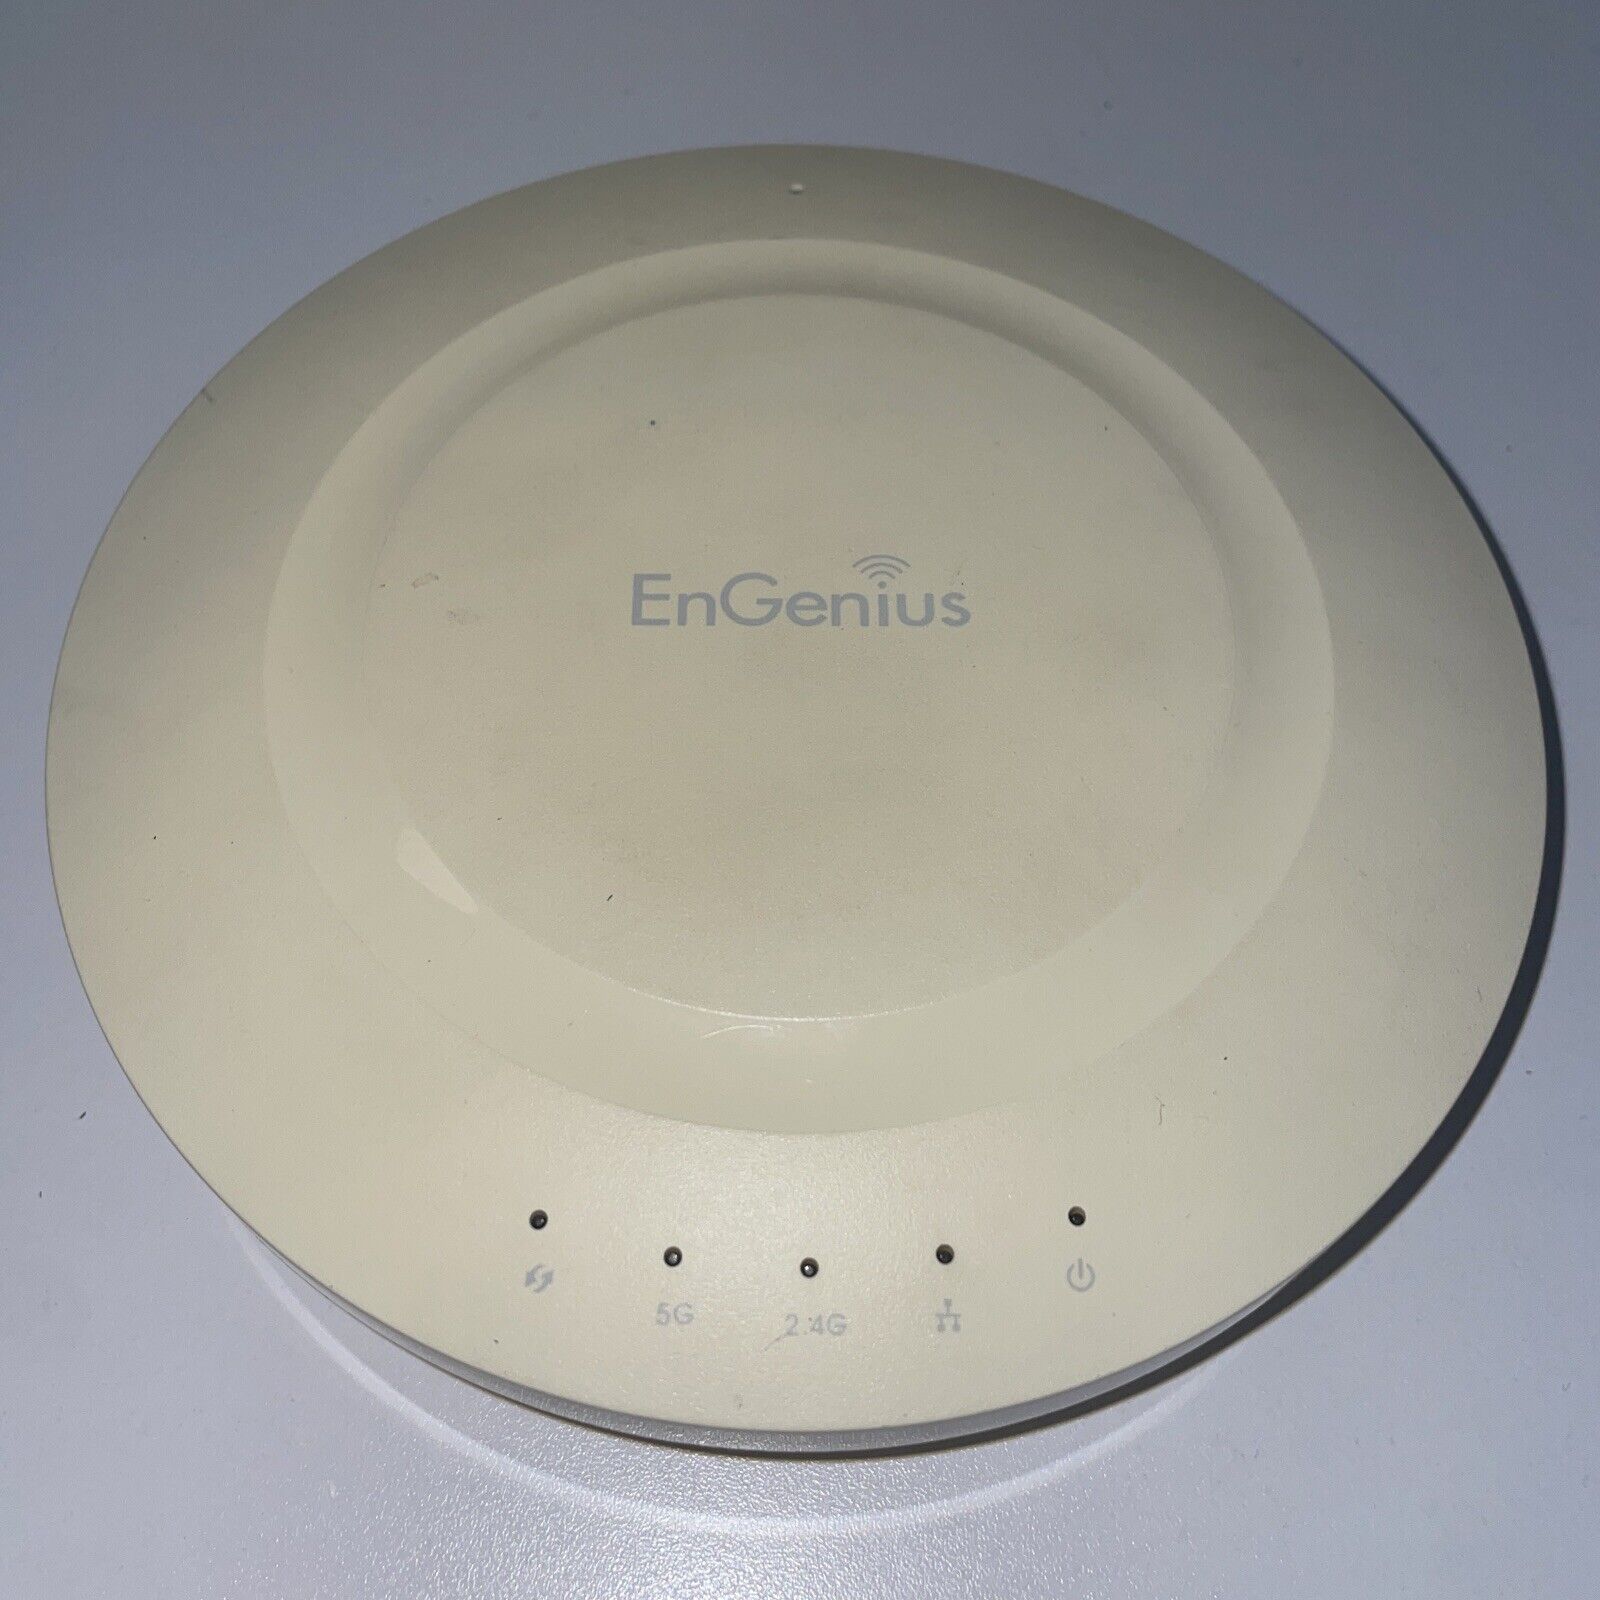 EnGenius EAP600 Wireless-N Long-Range Ceiling Mount Dual-Band Access Point WAP